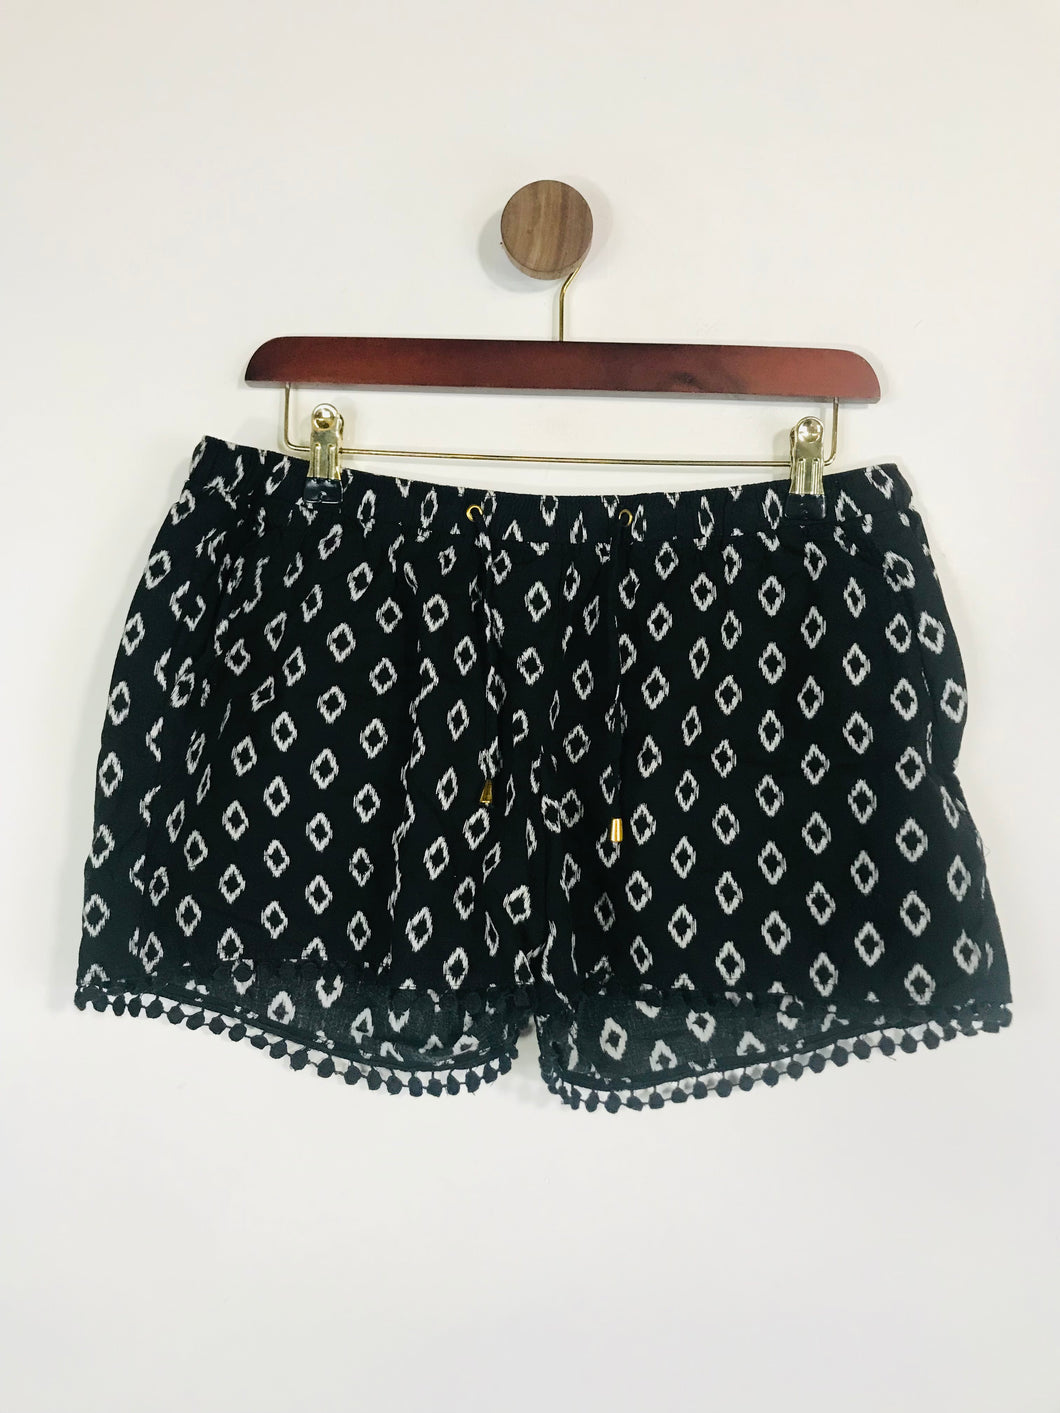 Seraphine Women's Boho Hot Pants Shorts | M UK10-12 | Black